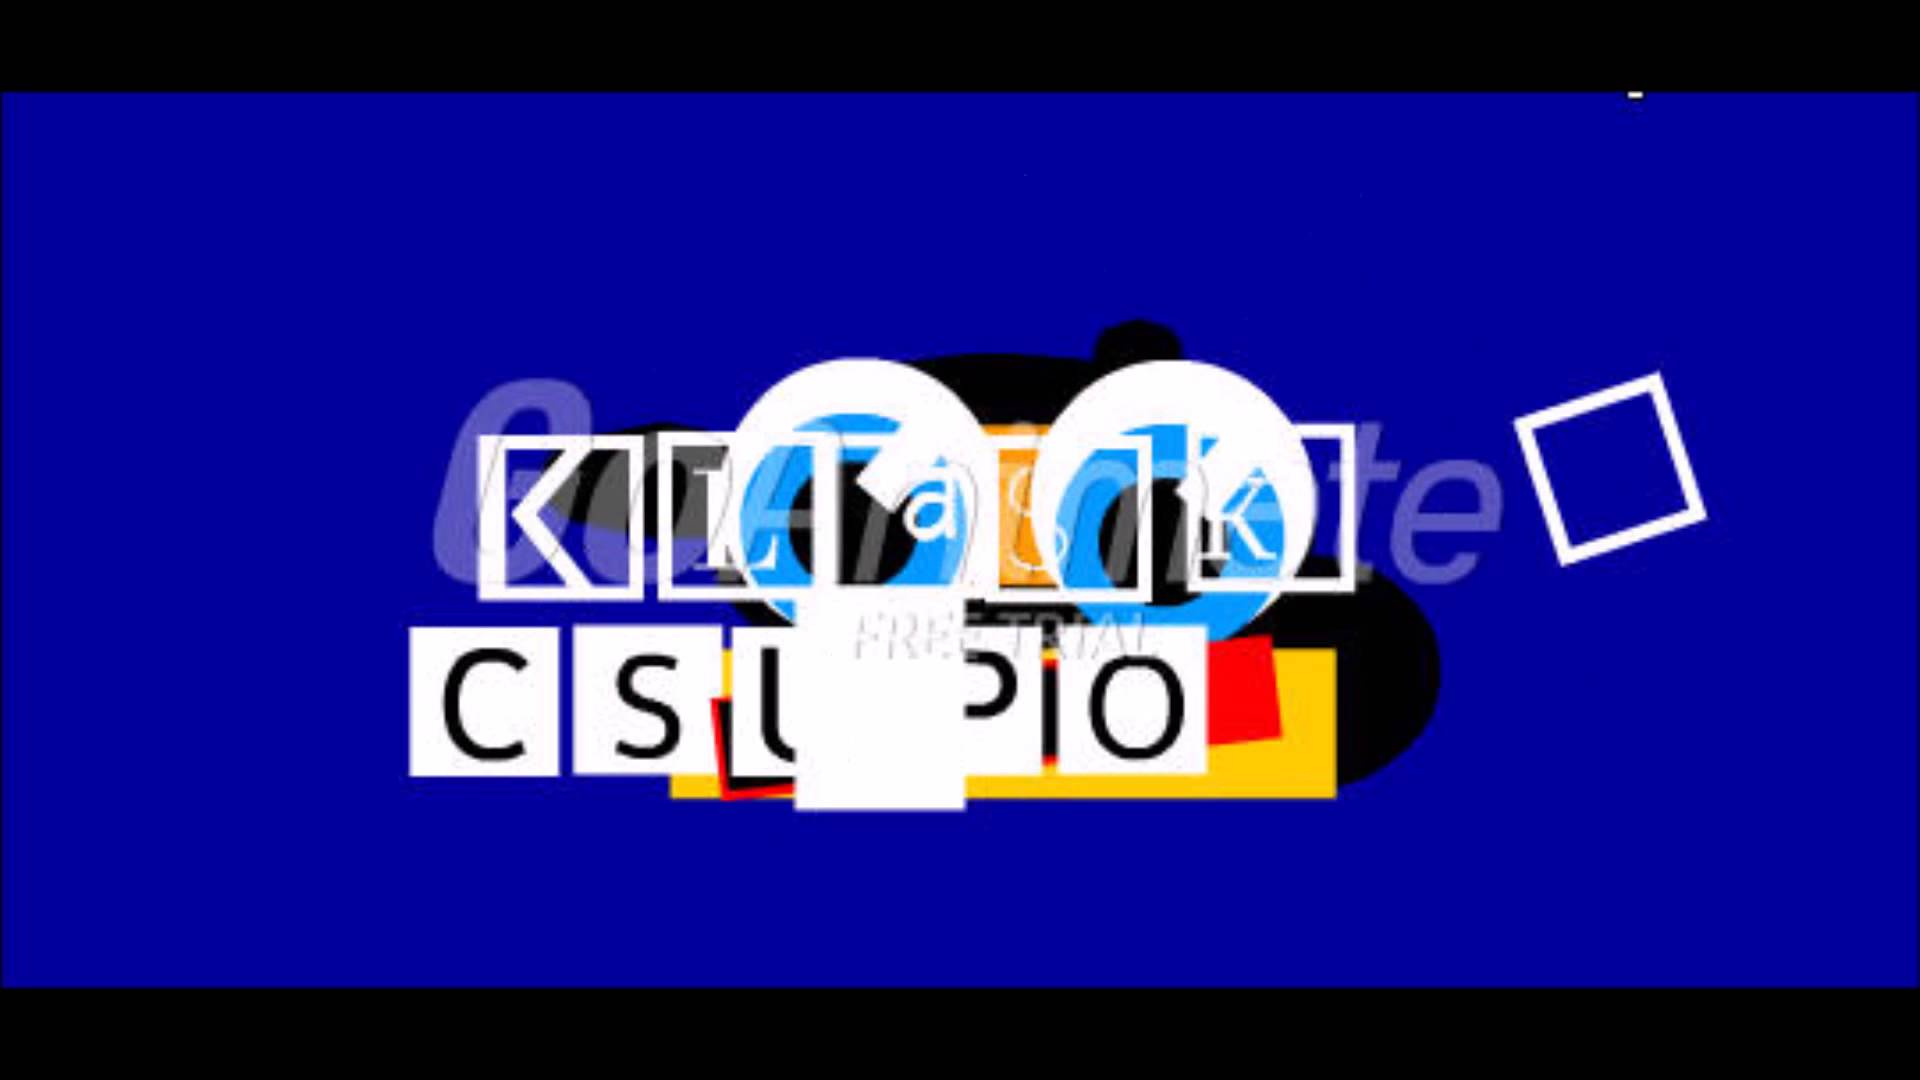 Klasky Logo - Klasky csupo movie Logos